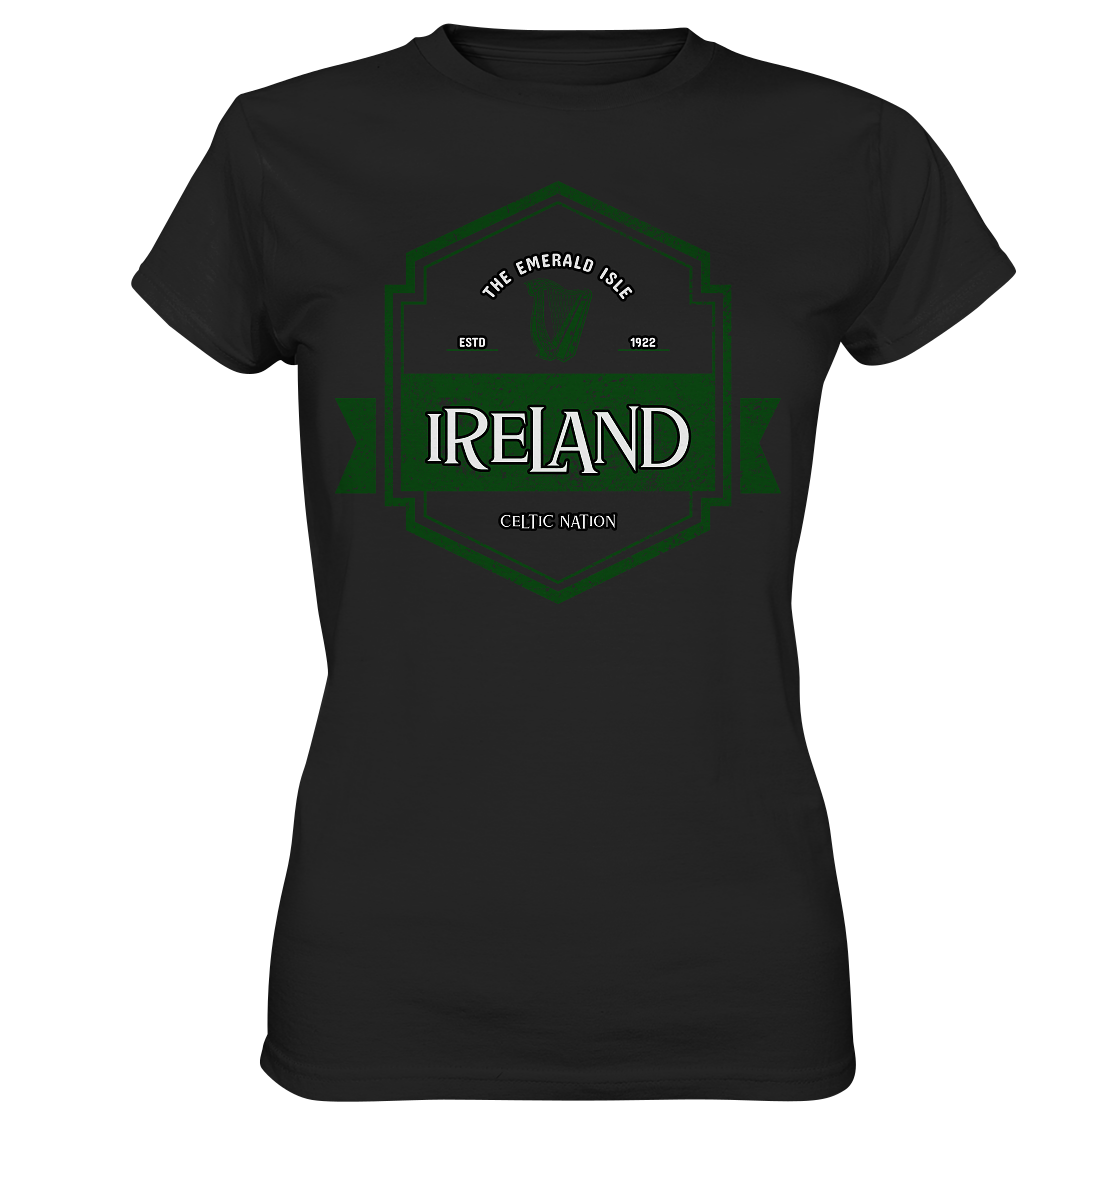 Ireland "The Emerald Isle / Celtic Nation" - Ladies Premium Shirt